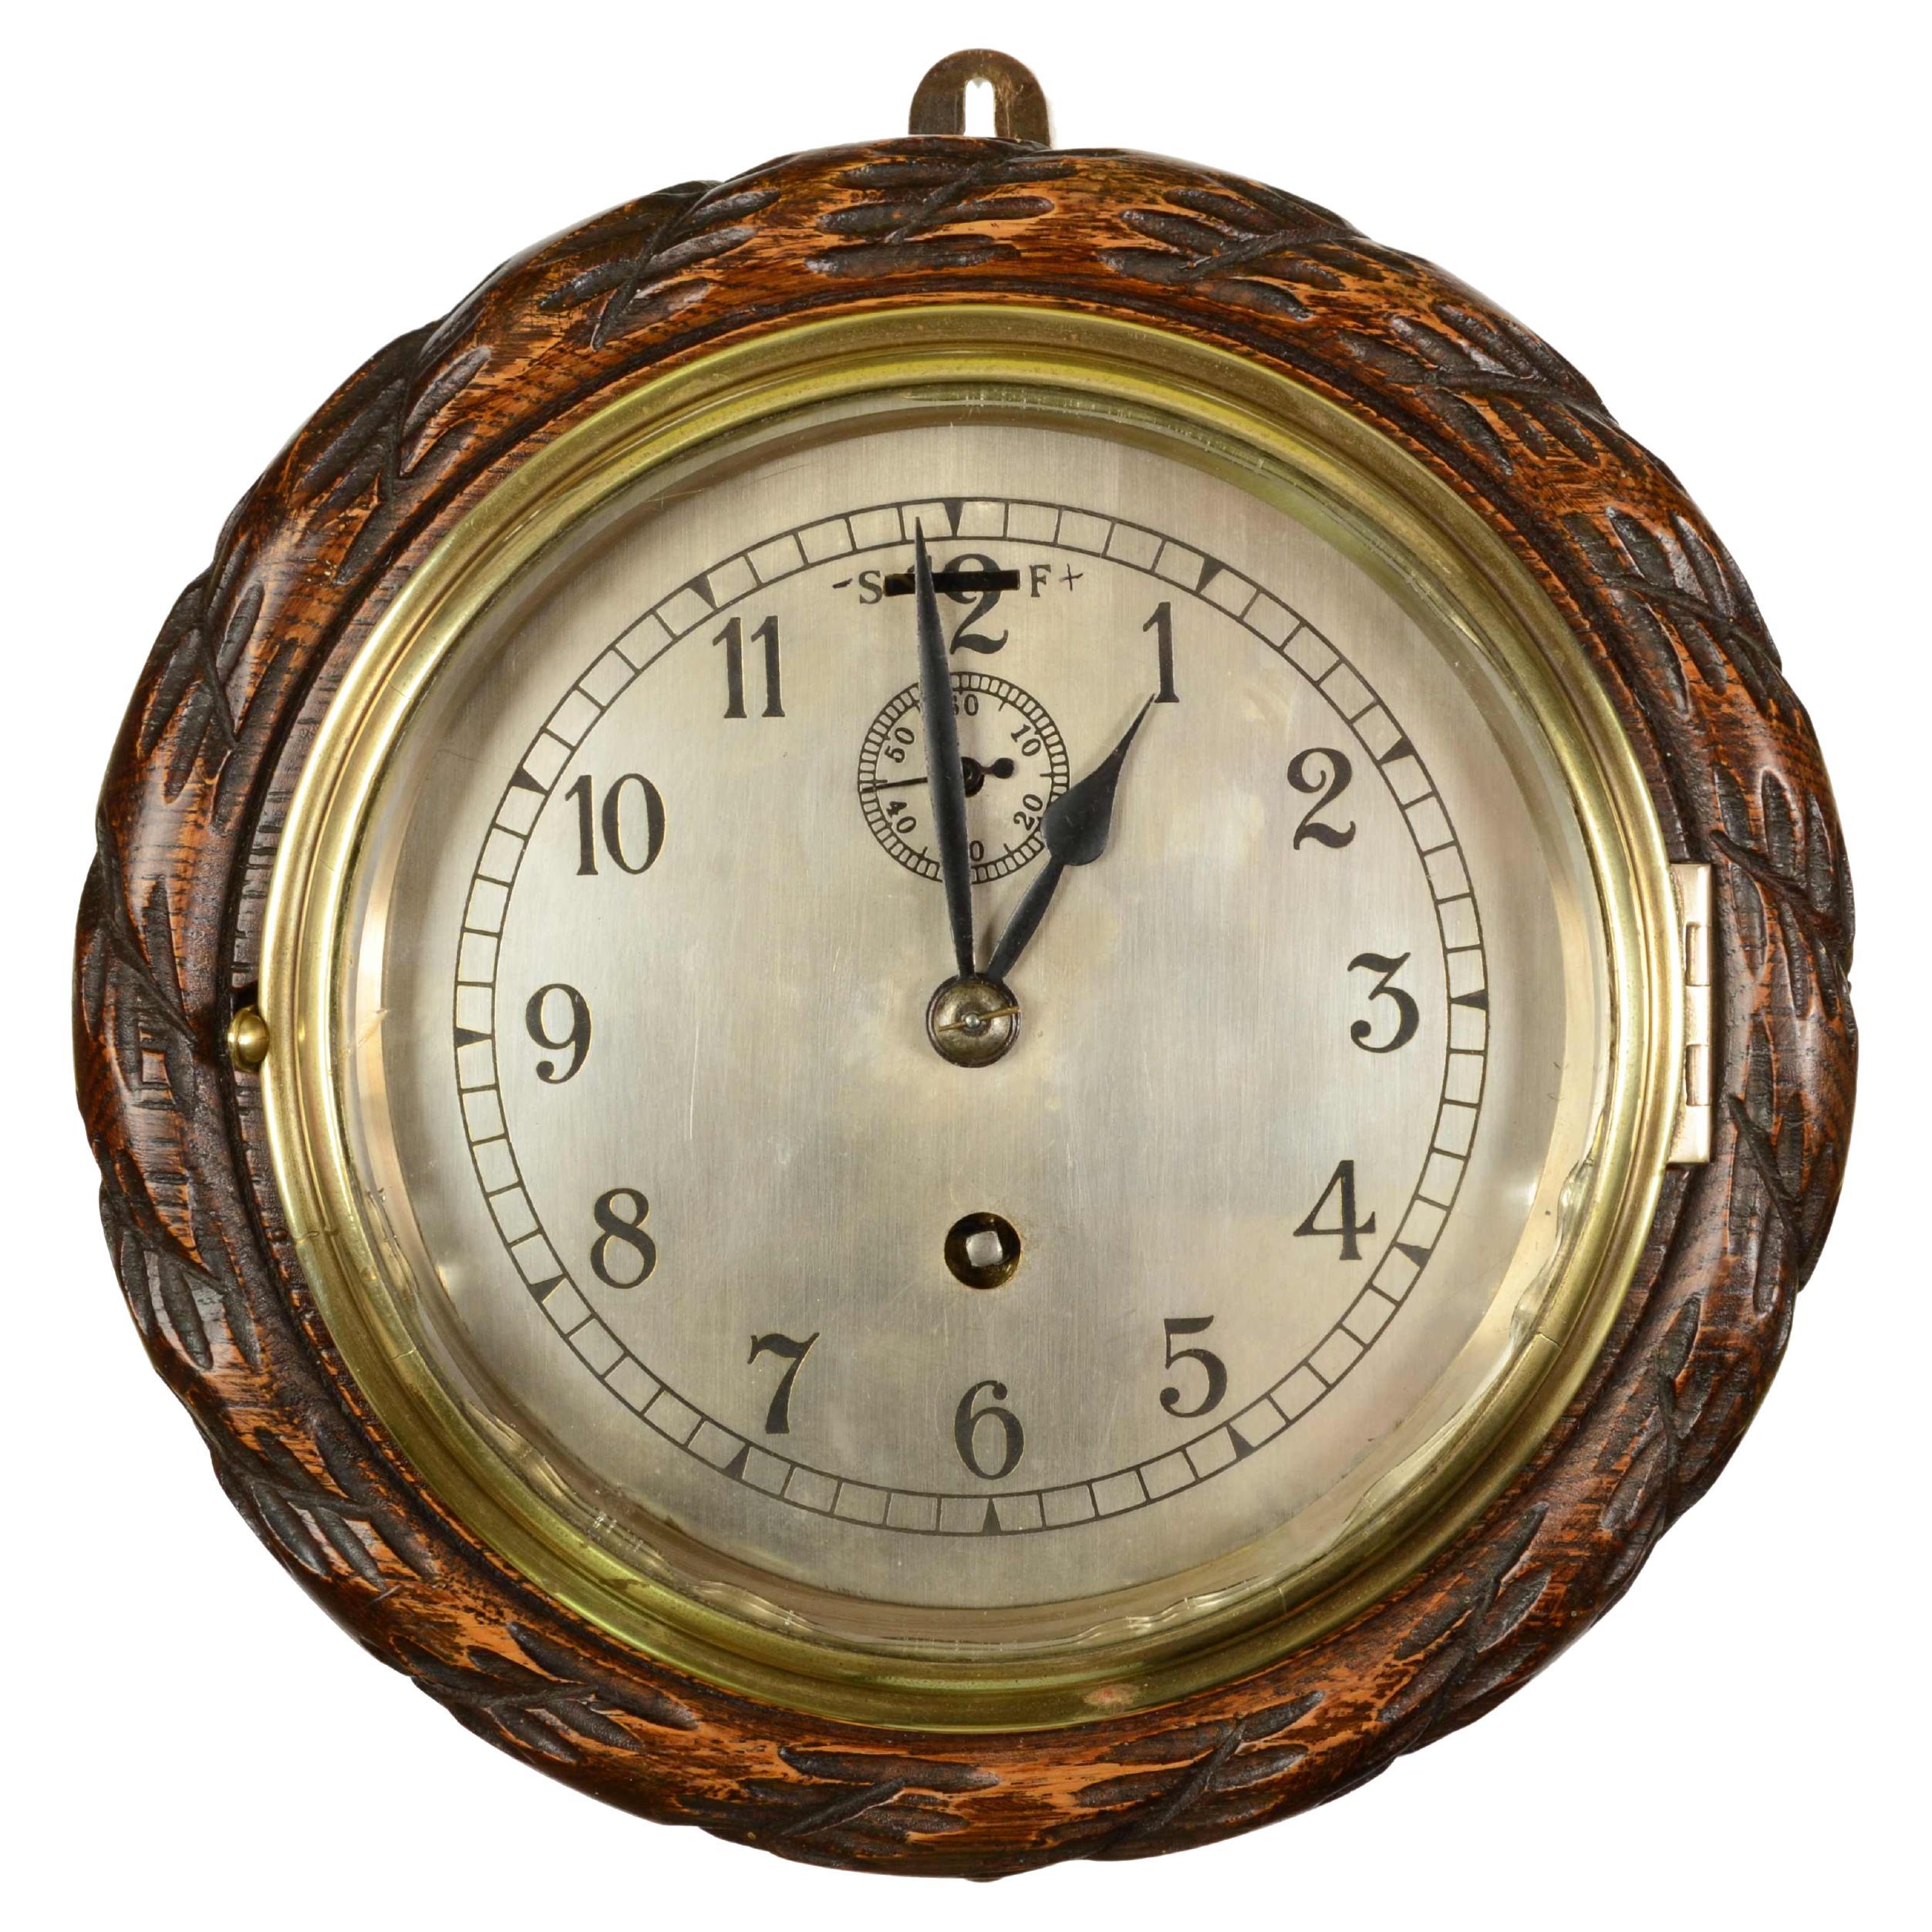 1930s Brass and Wood Shipboard Navigation Clock Antique Nautical Instrument